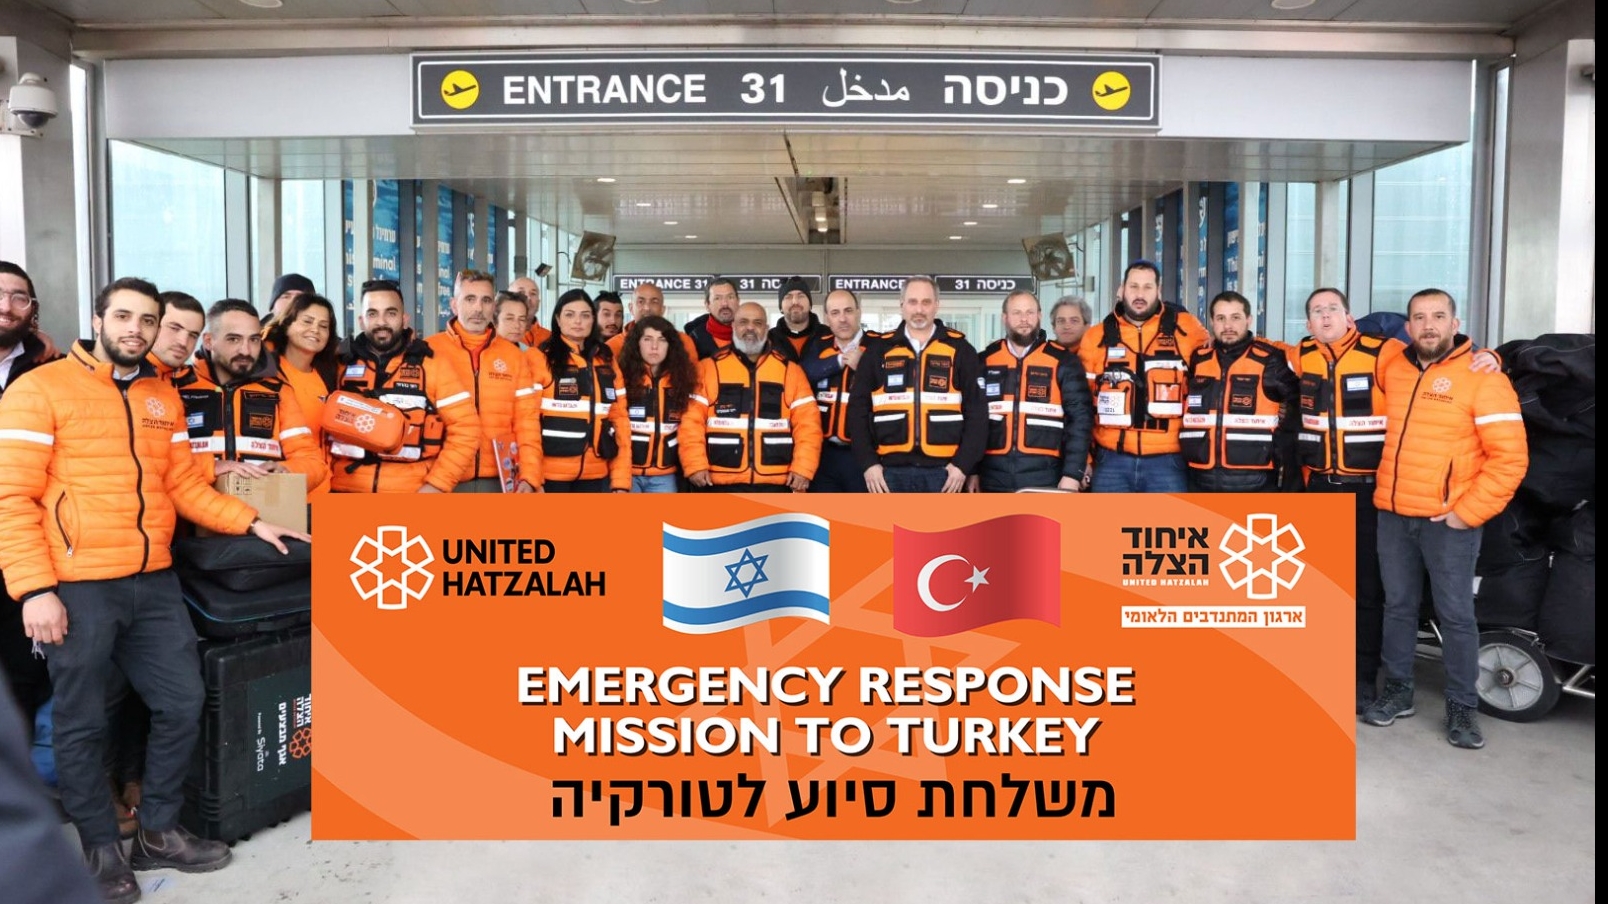 Echipa de salvatori din Israel United Hatzalah / Facebook